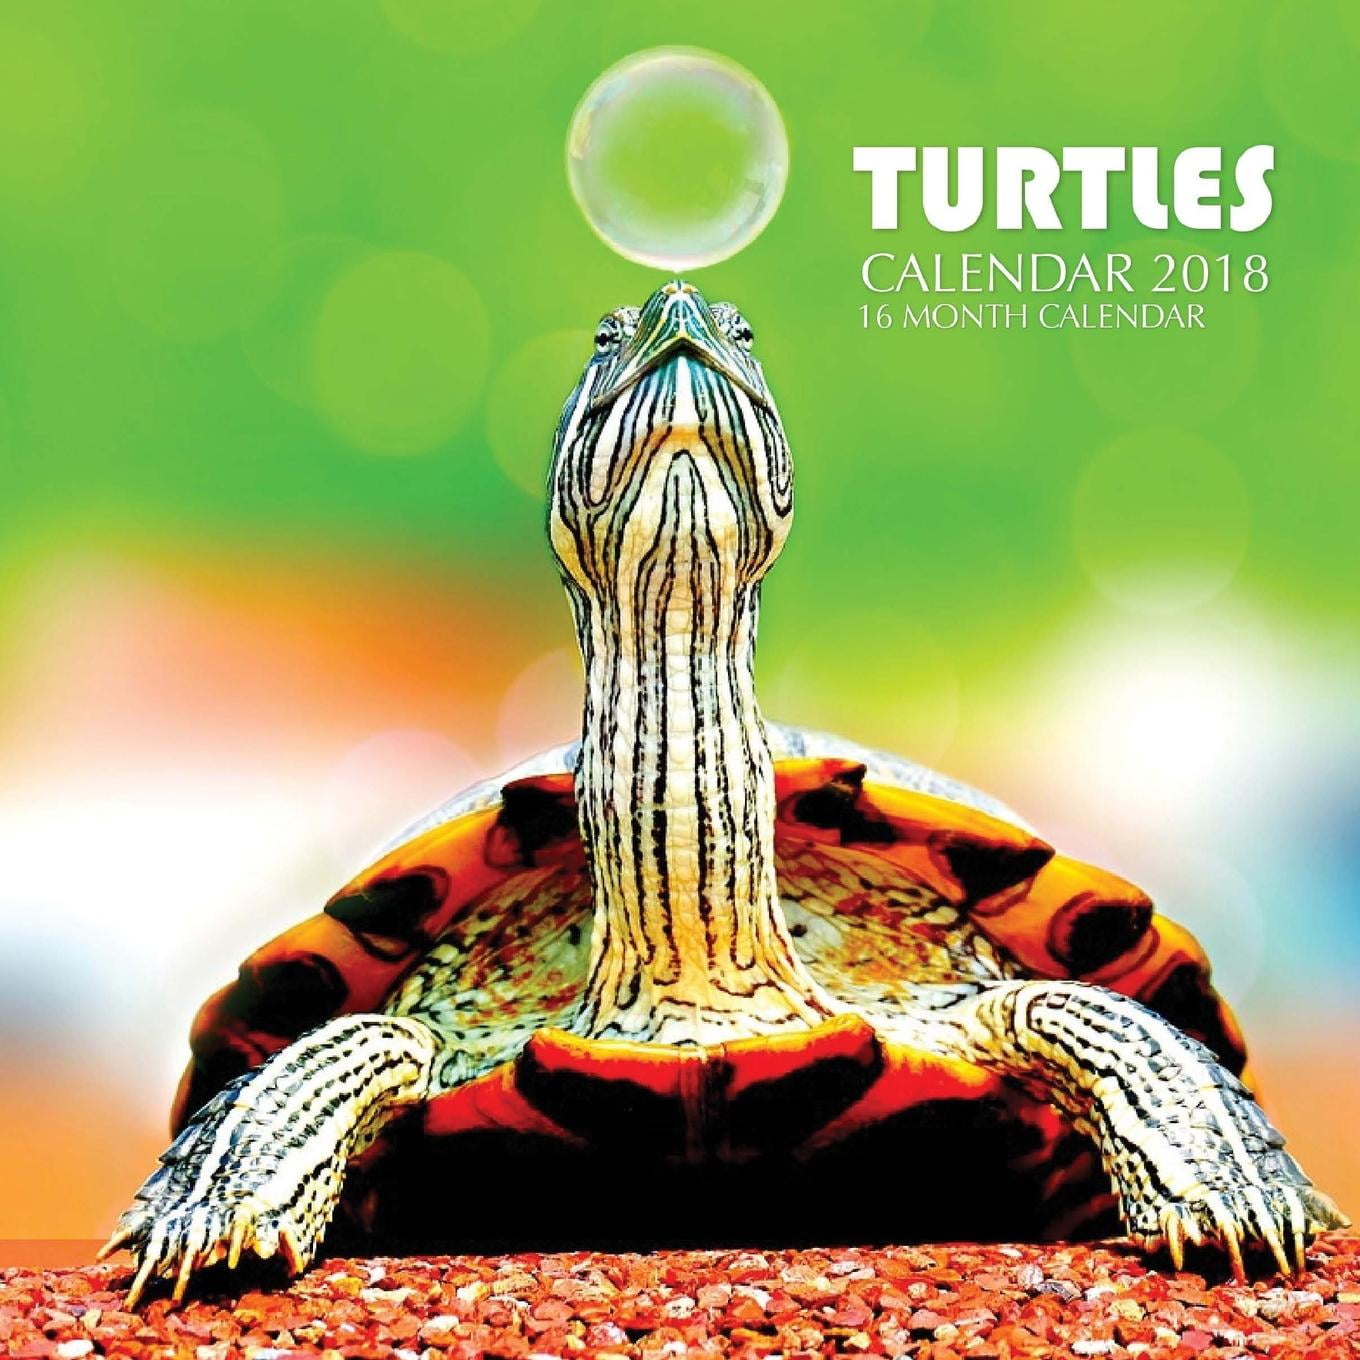 Turtles Calendar 2018 16 Month Calendar (Paperback)